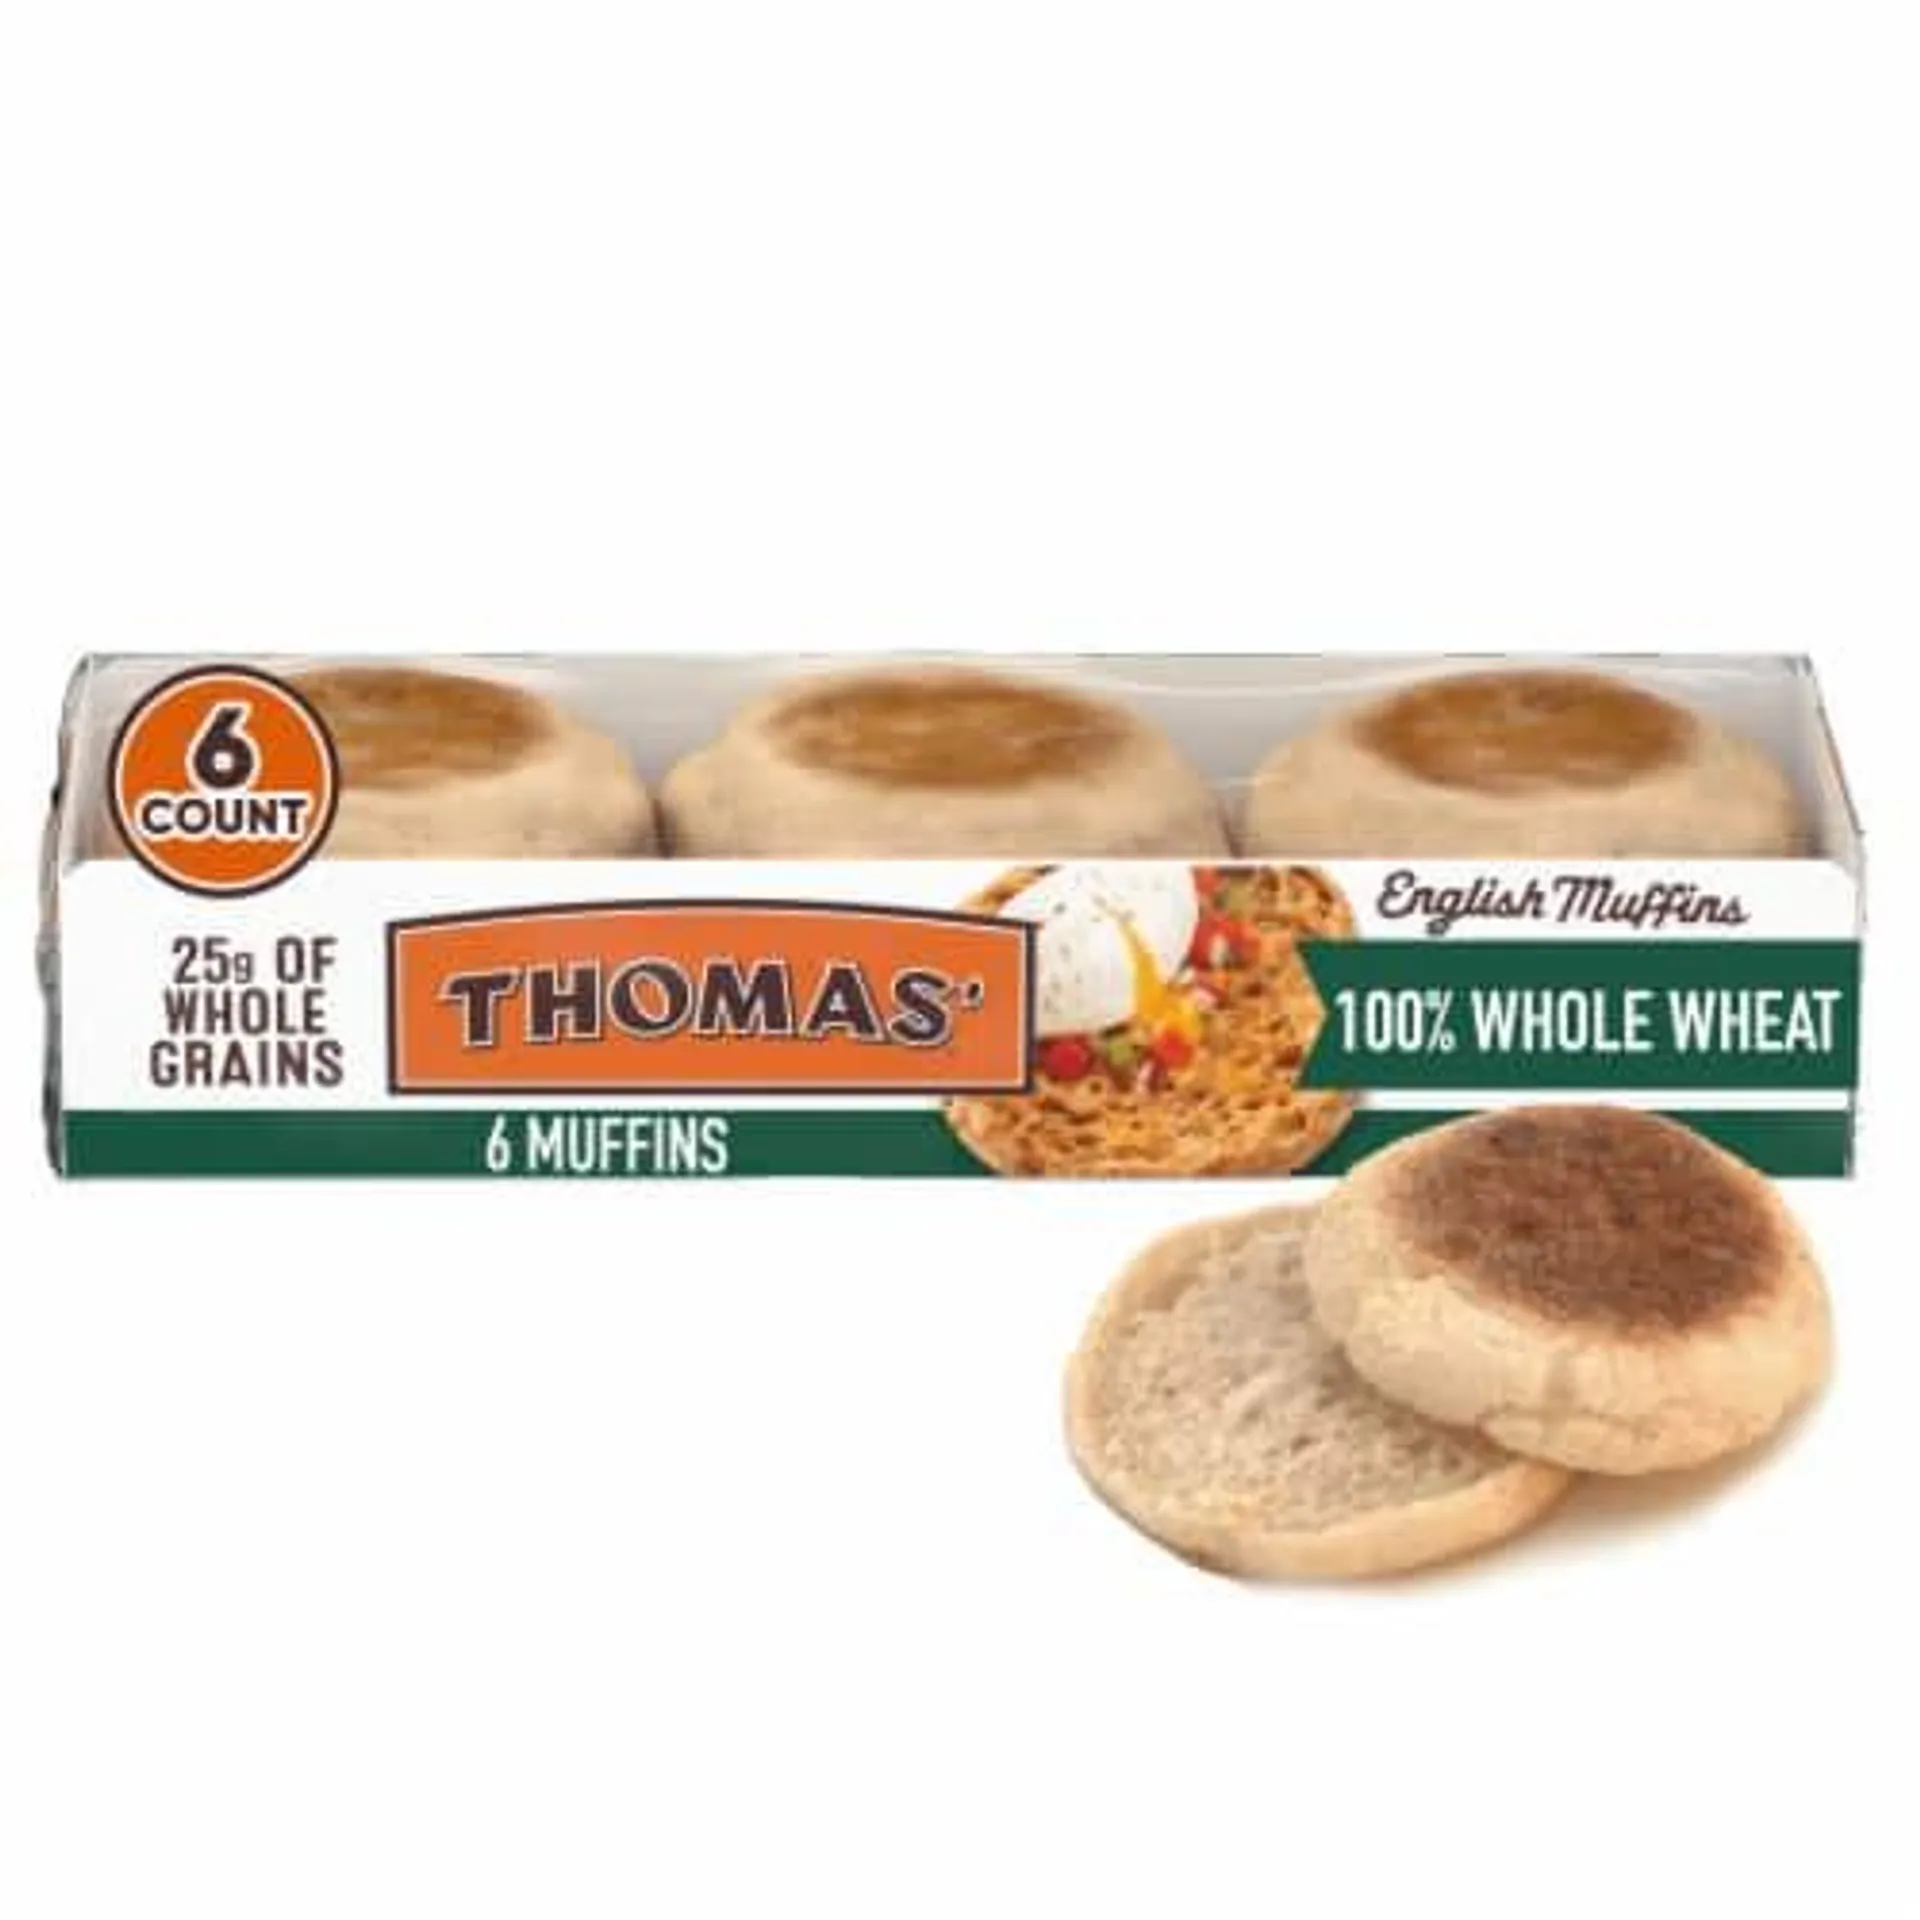 Thomas' Nooks & Crannies 100% Whole Wheat English Muffins